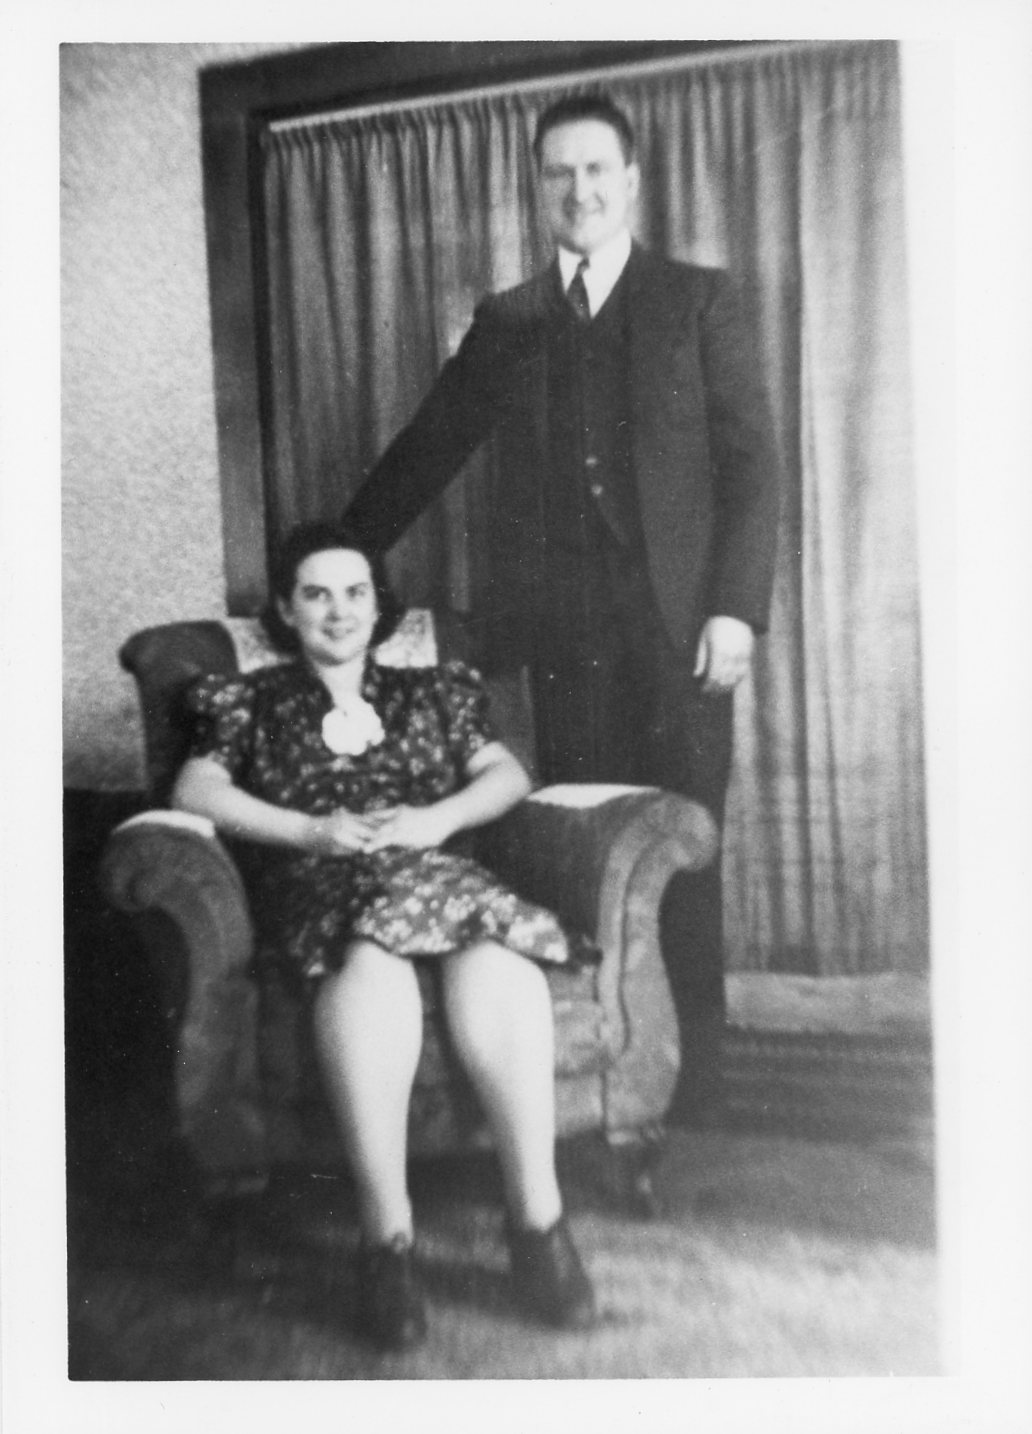 Kenneth Charles Warner and his wife, Marguerite Elizabeth Harrington Warner